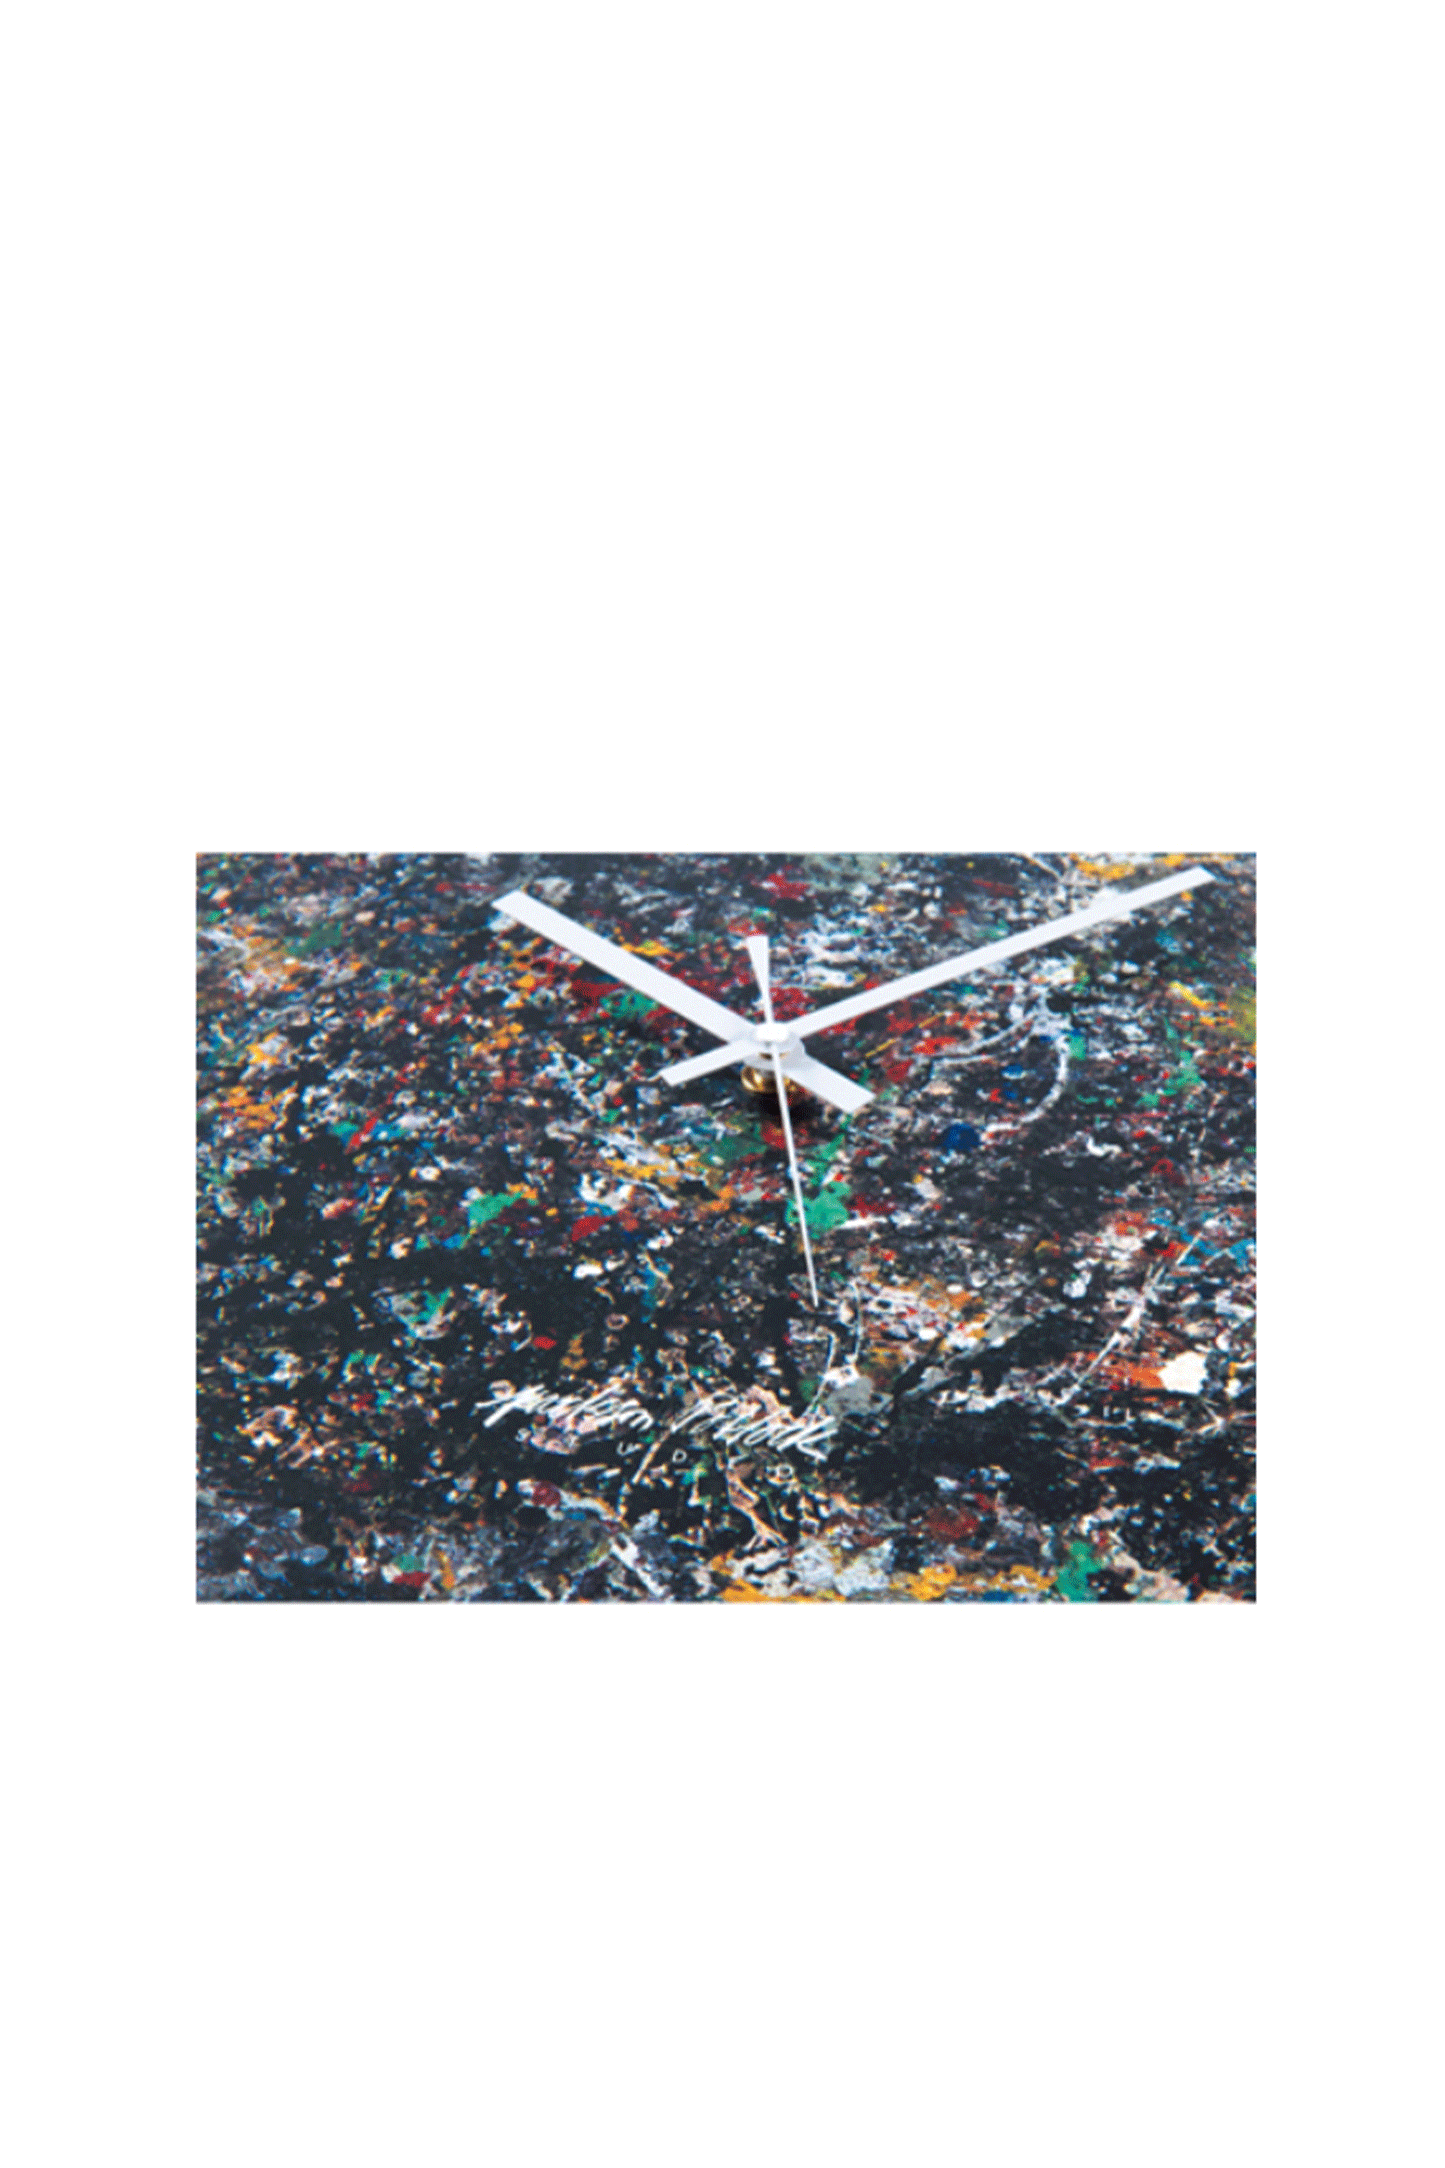 WALL CLOCK "Jackson Pollock Studio 03" made by KARIMOKU (watch)